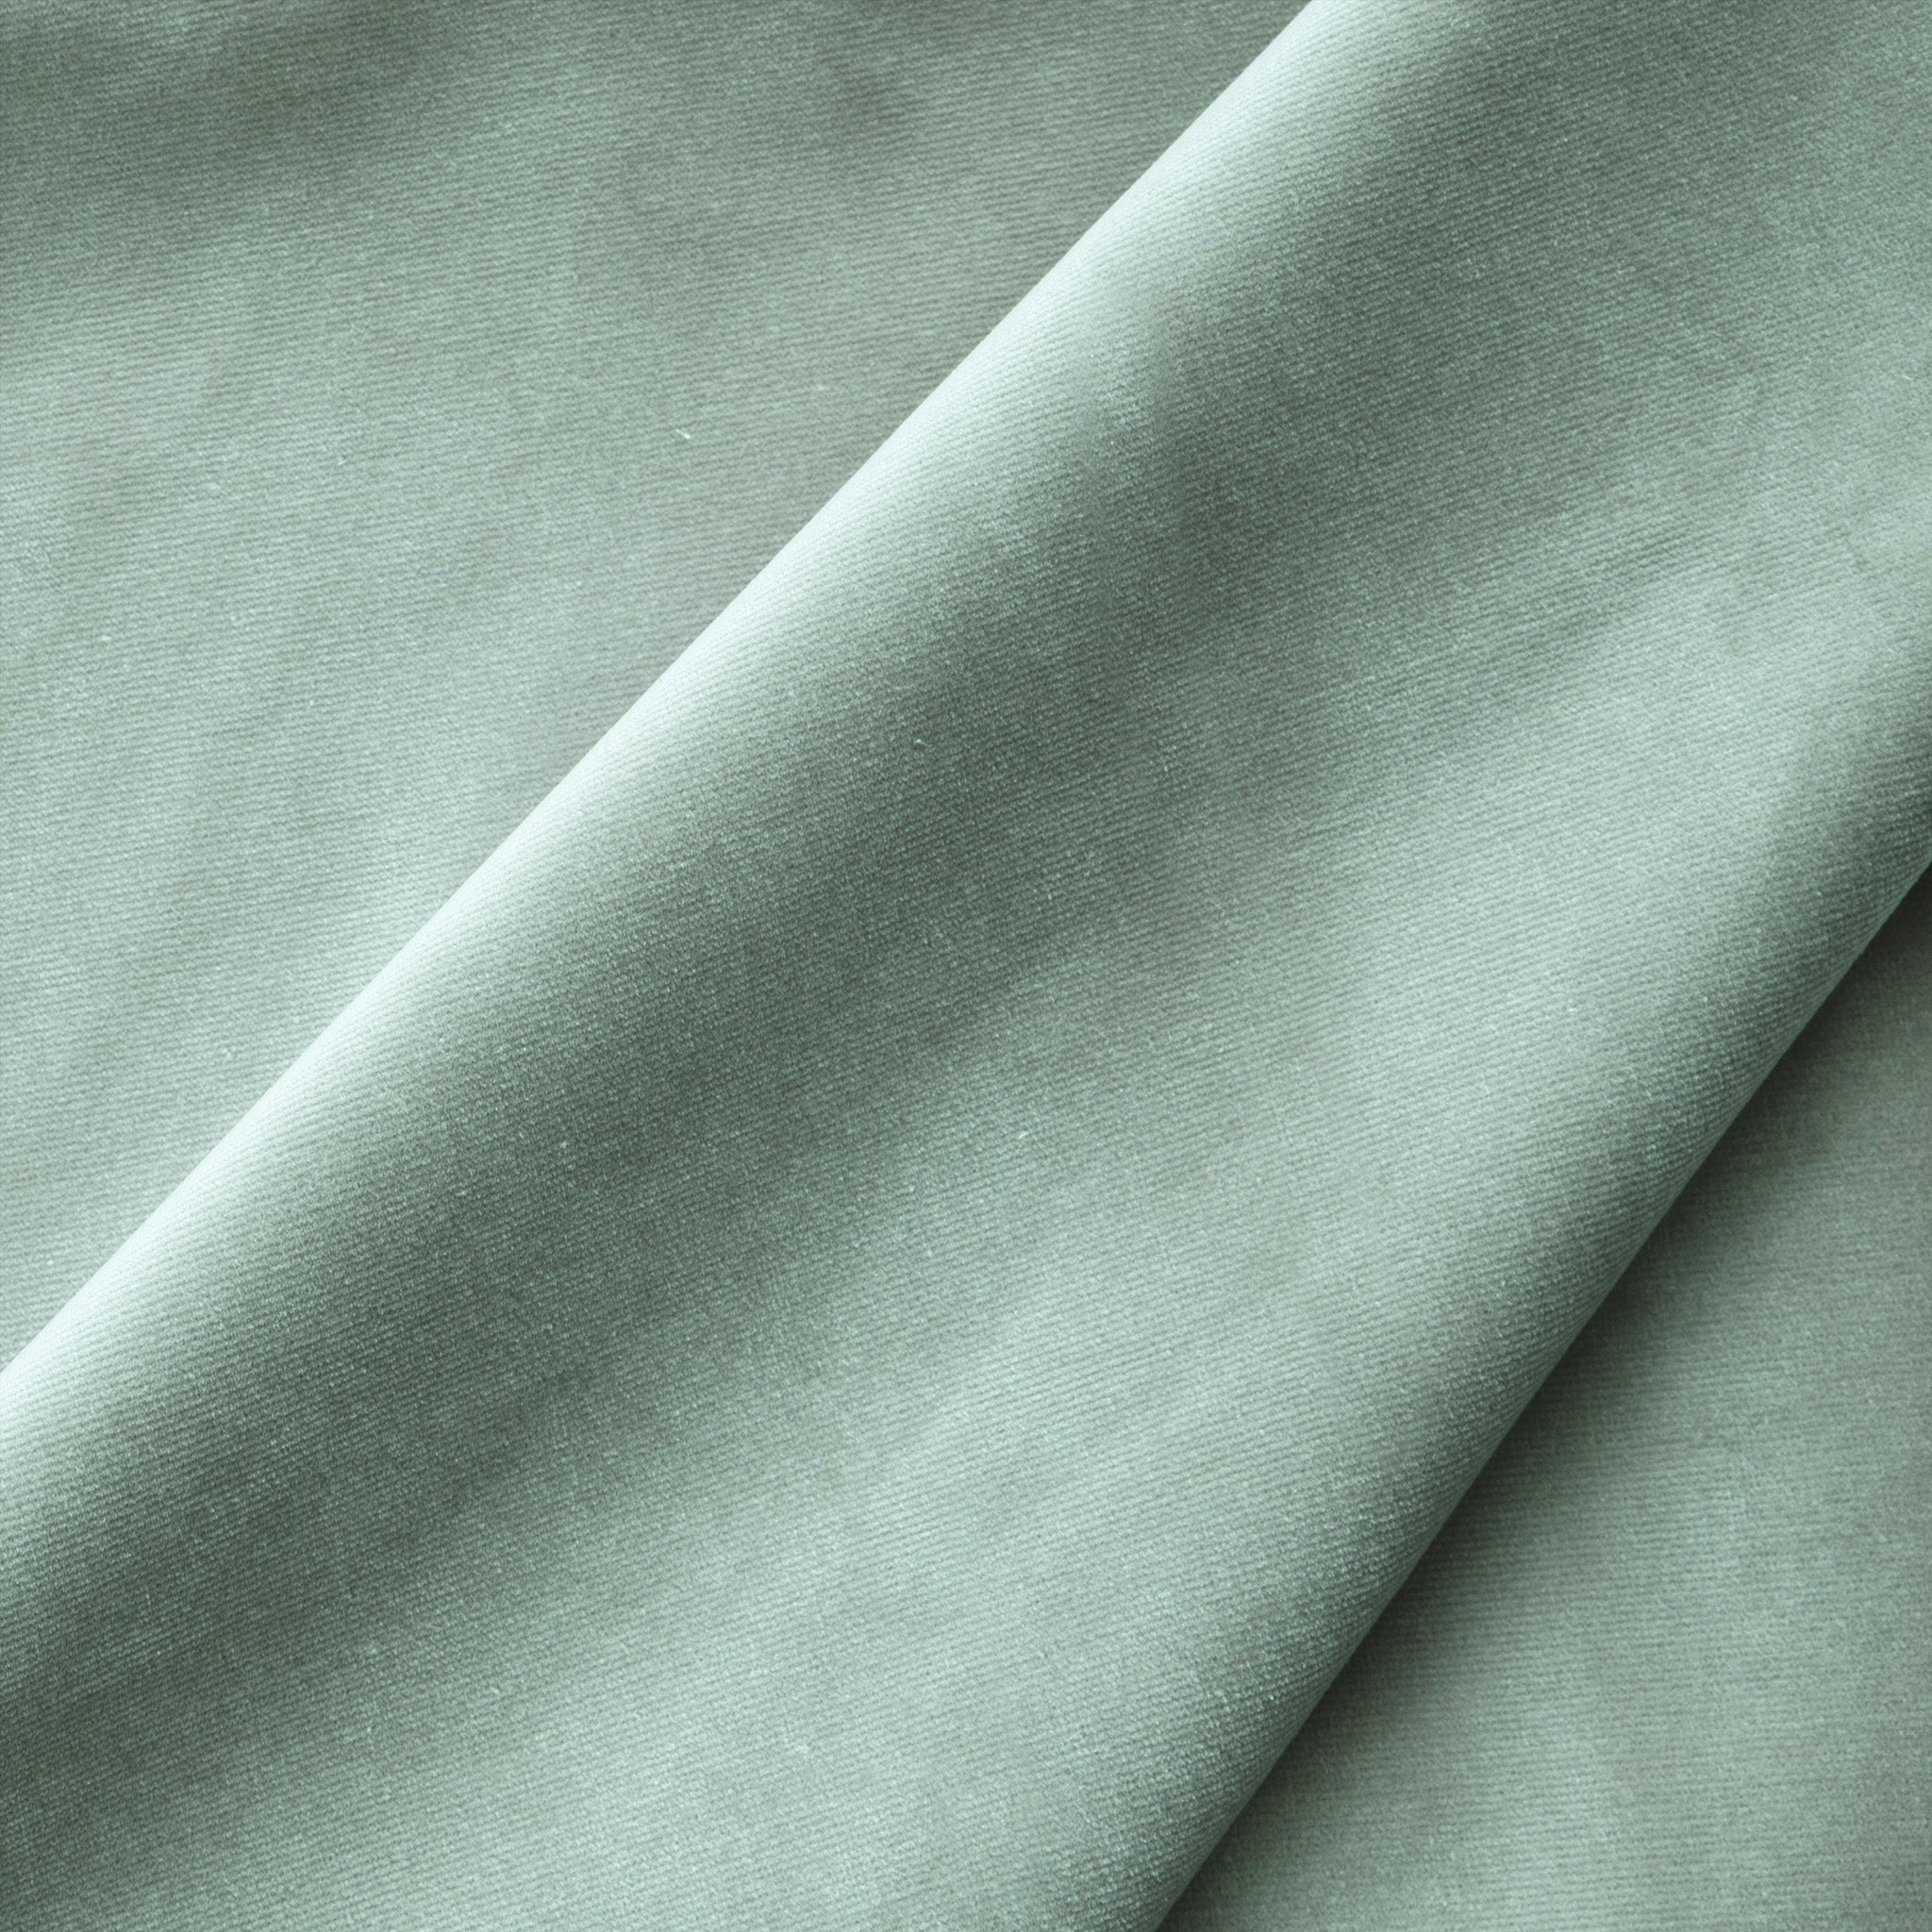 Blue Green Velvet Fabric Close-Up